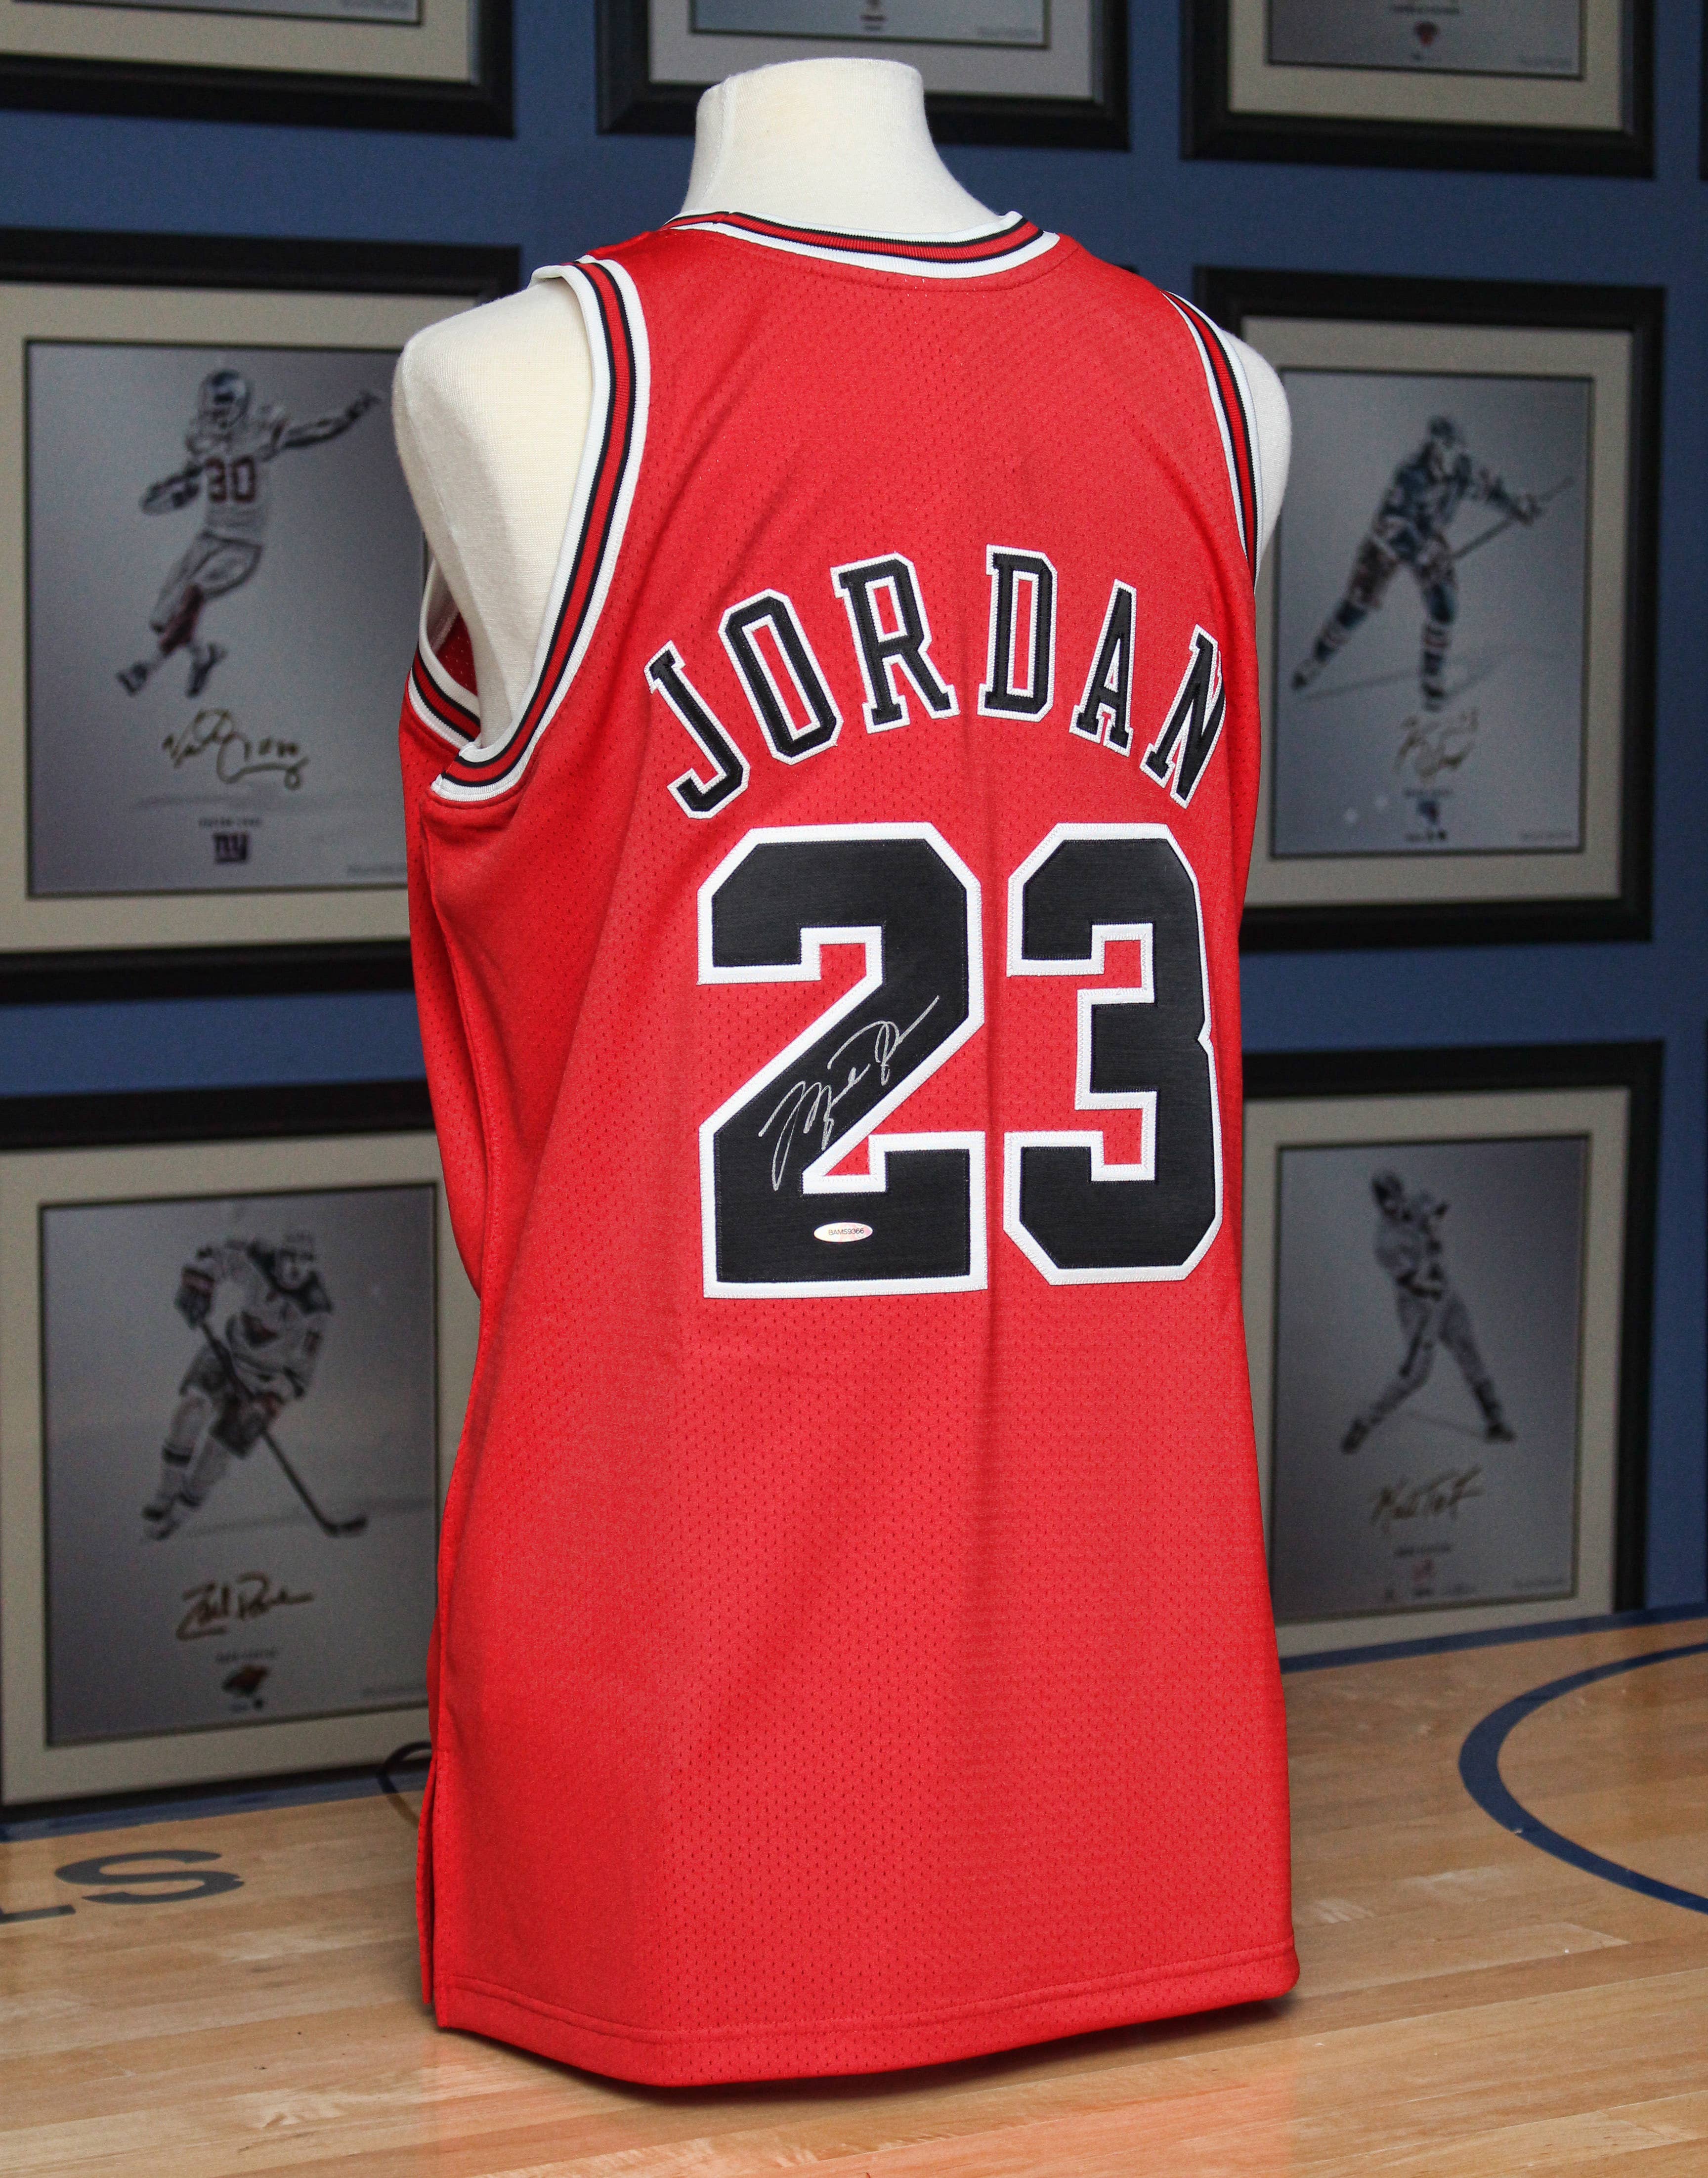 Michael Jordan jersey